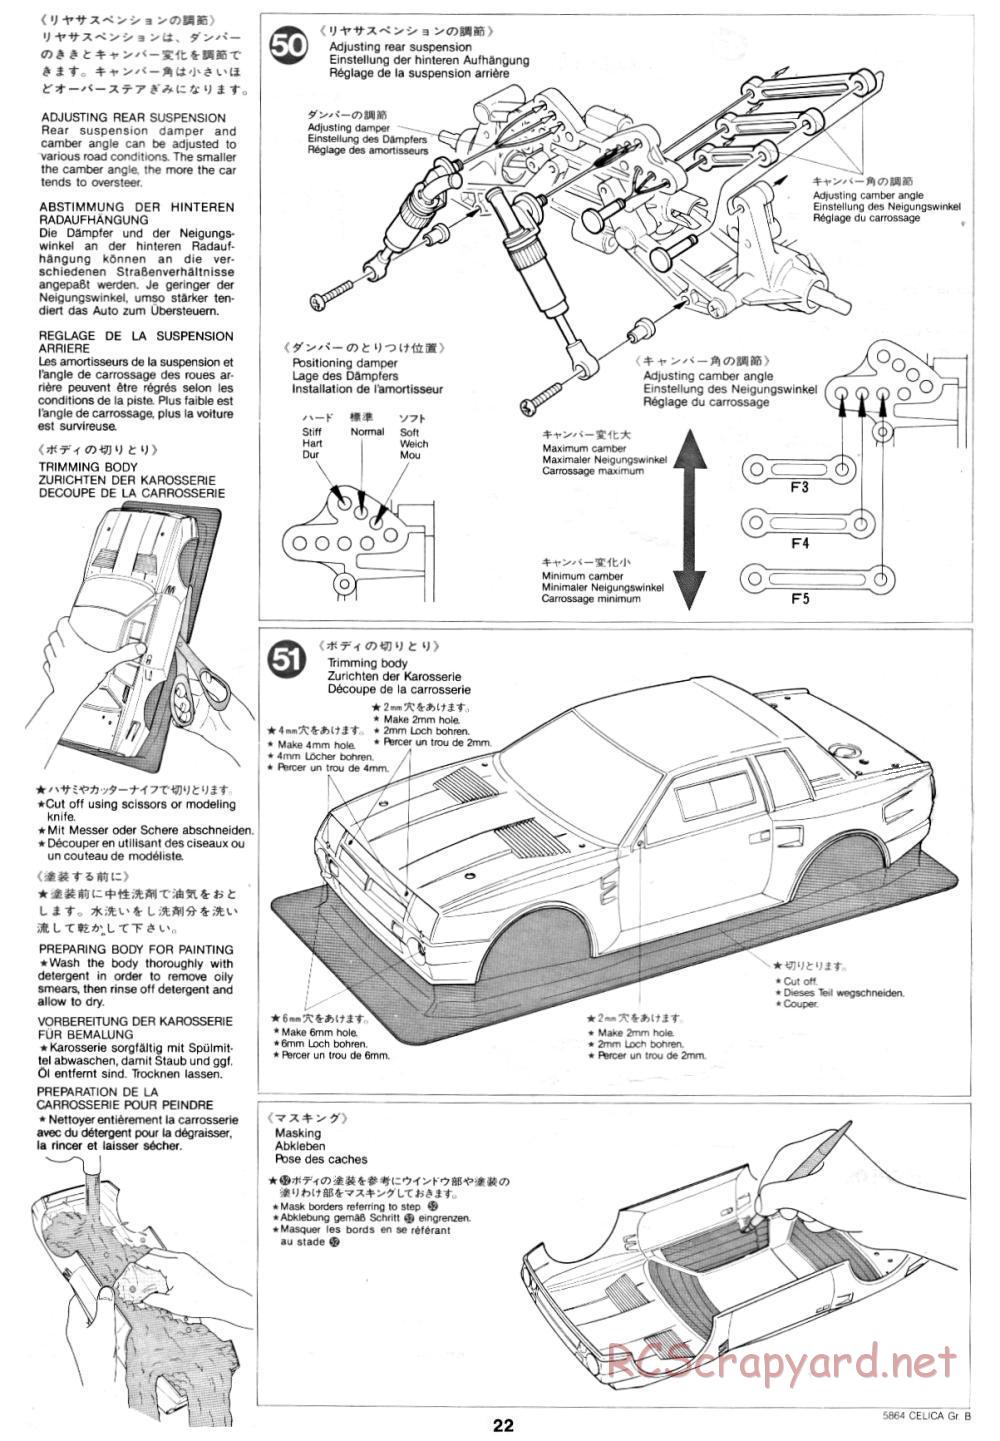 Tamiya - Toyota Celica Gr.B Rally Special - 58064 - Manual - Page 22